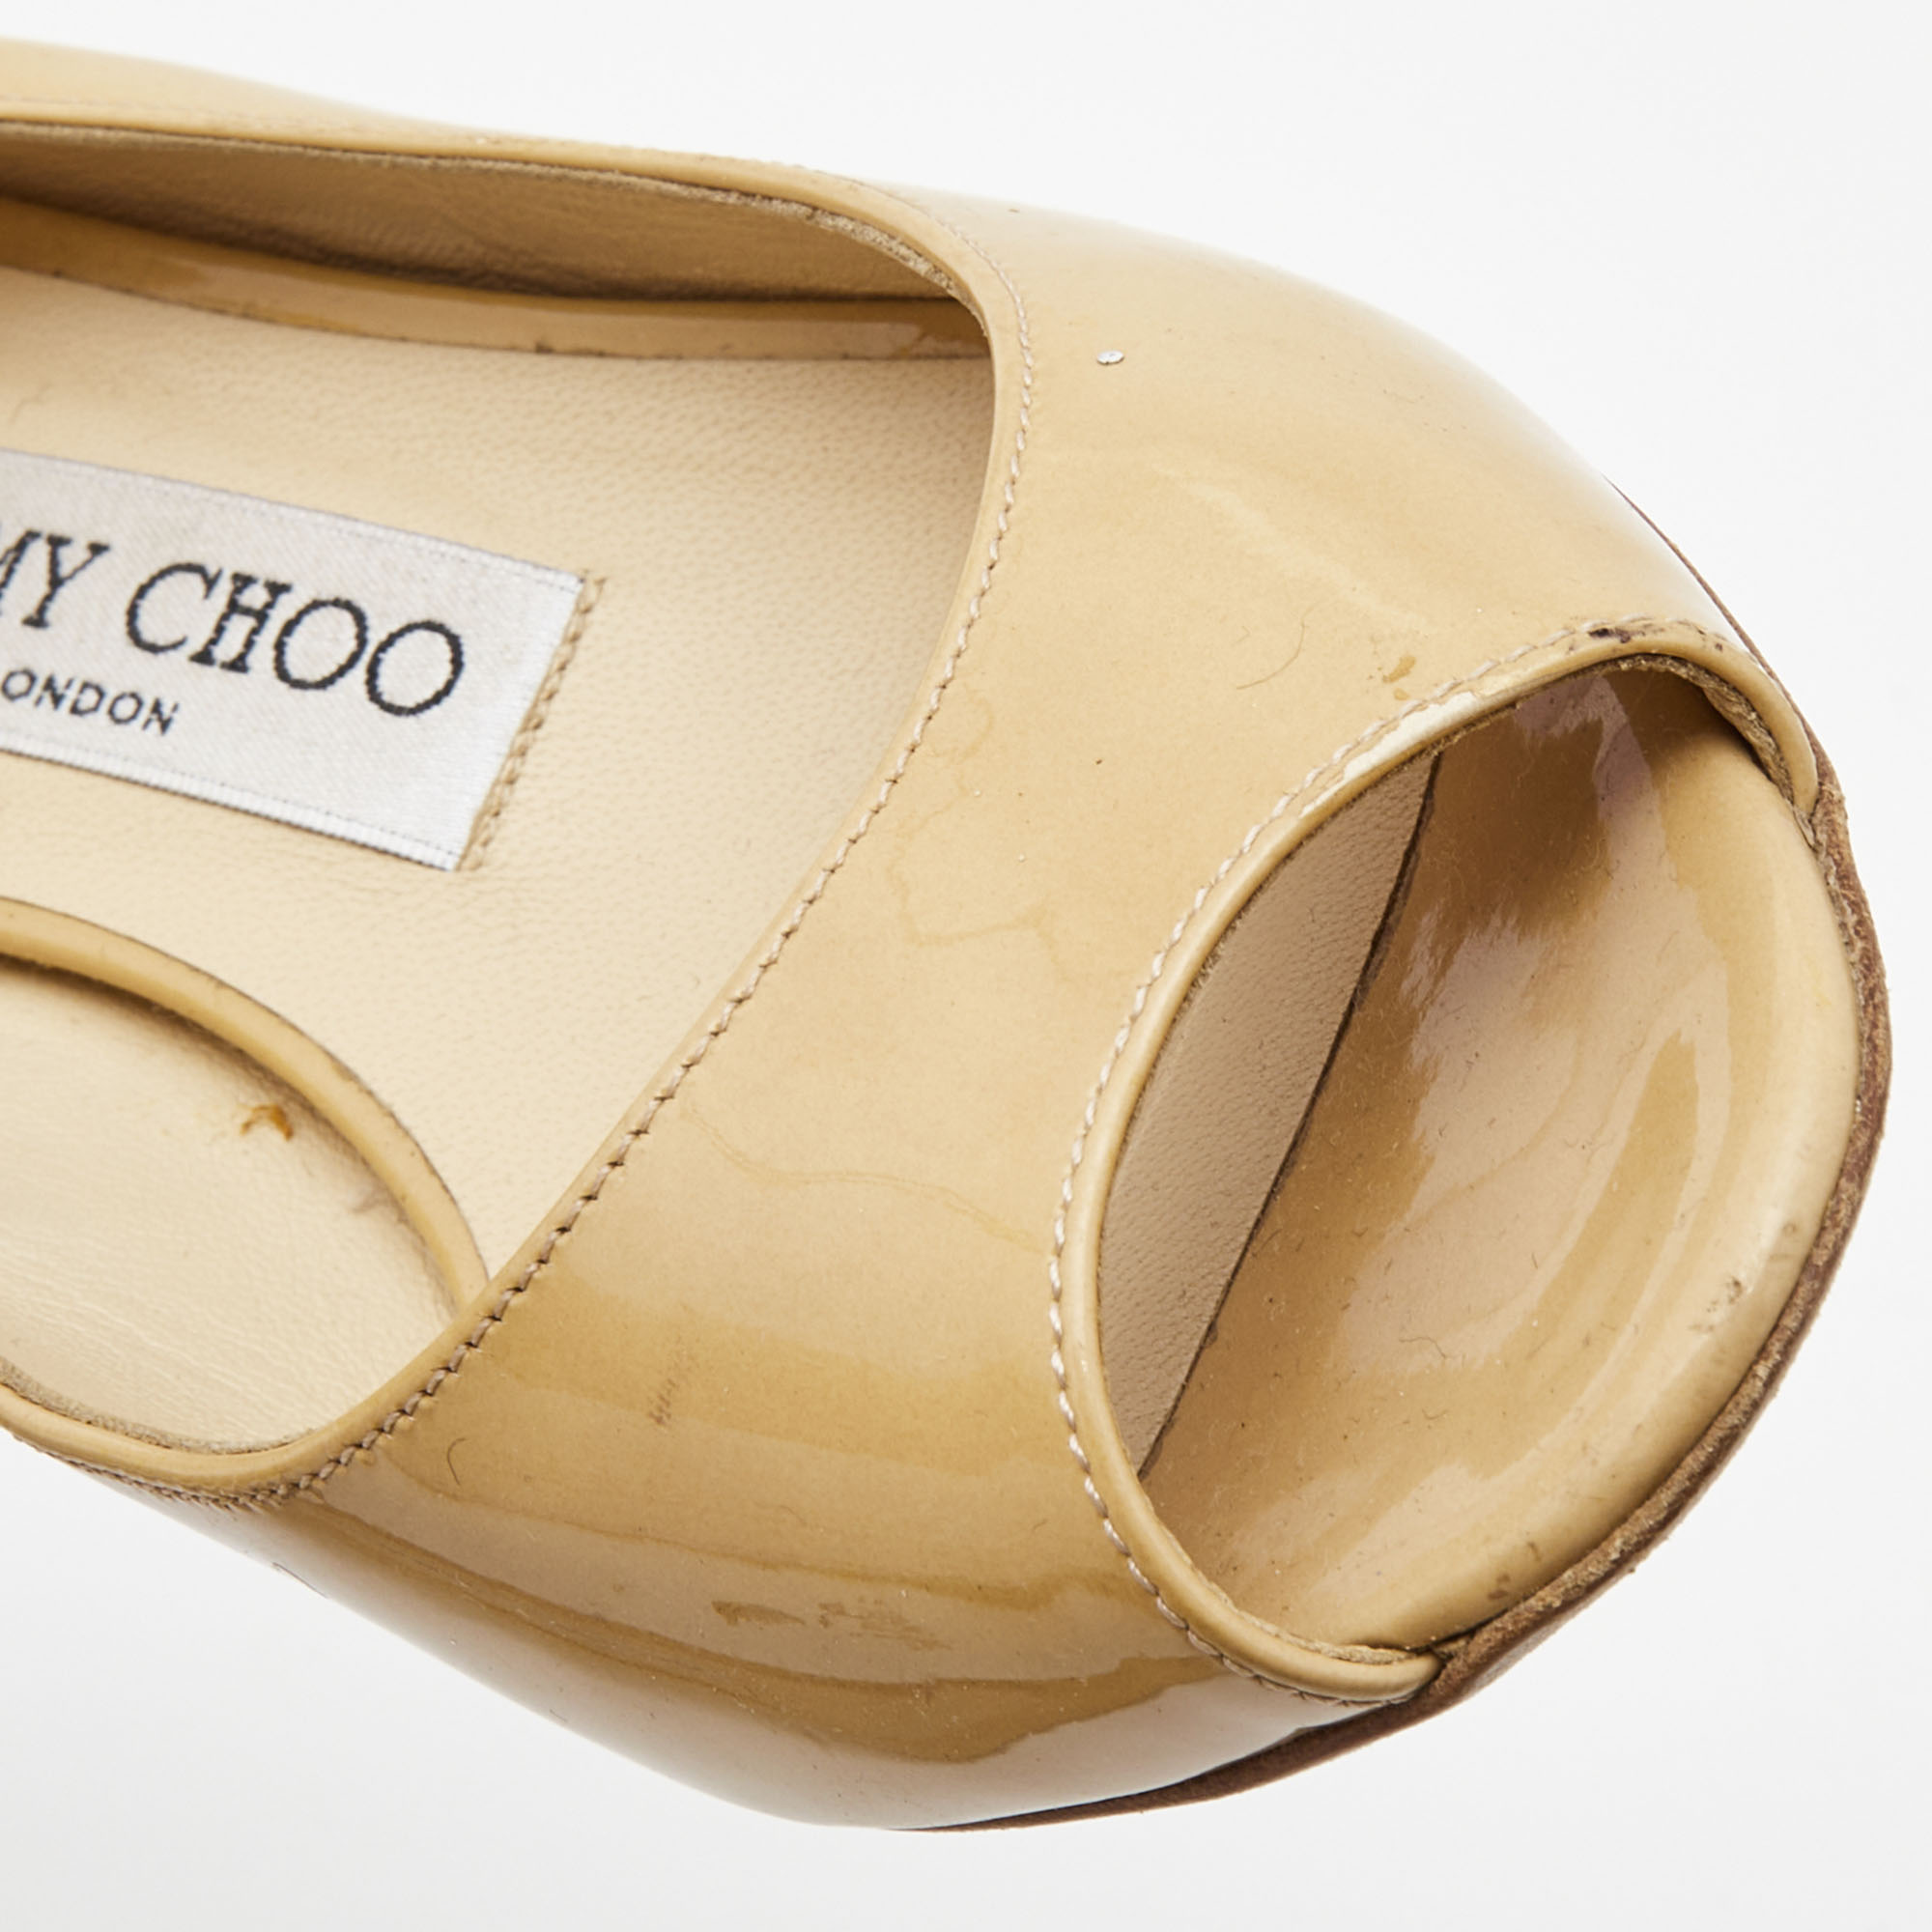 Jimmy Choo Beige Patent Leather Peep Toe Wedge Pumps Size 35